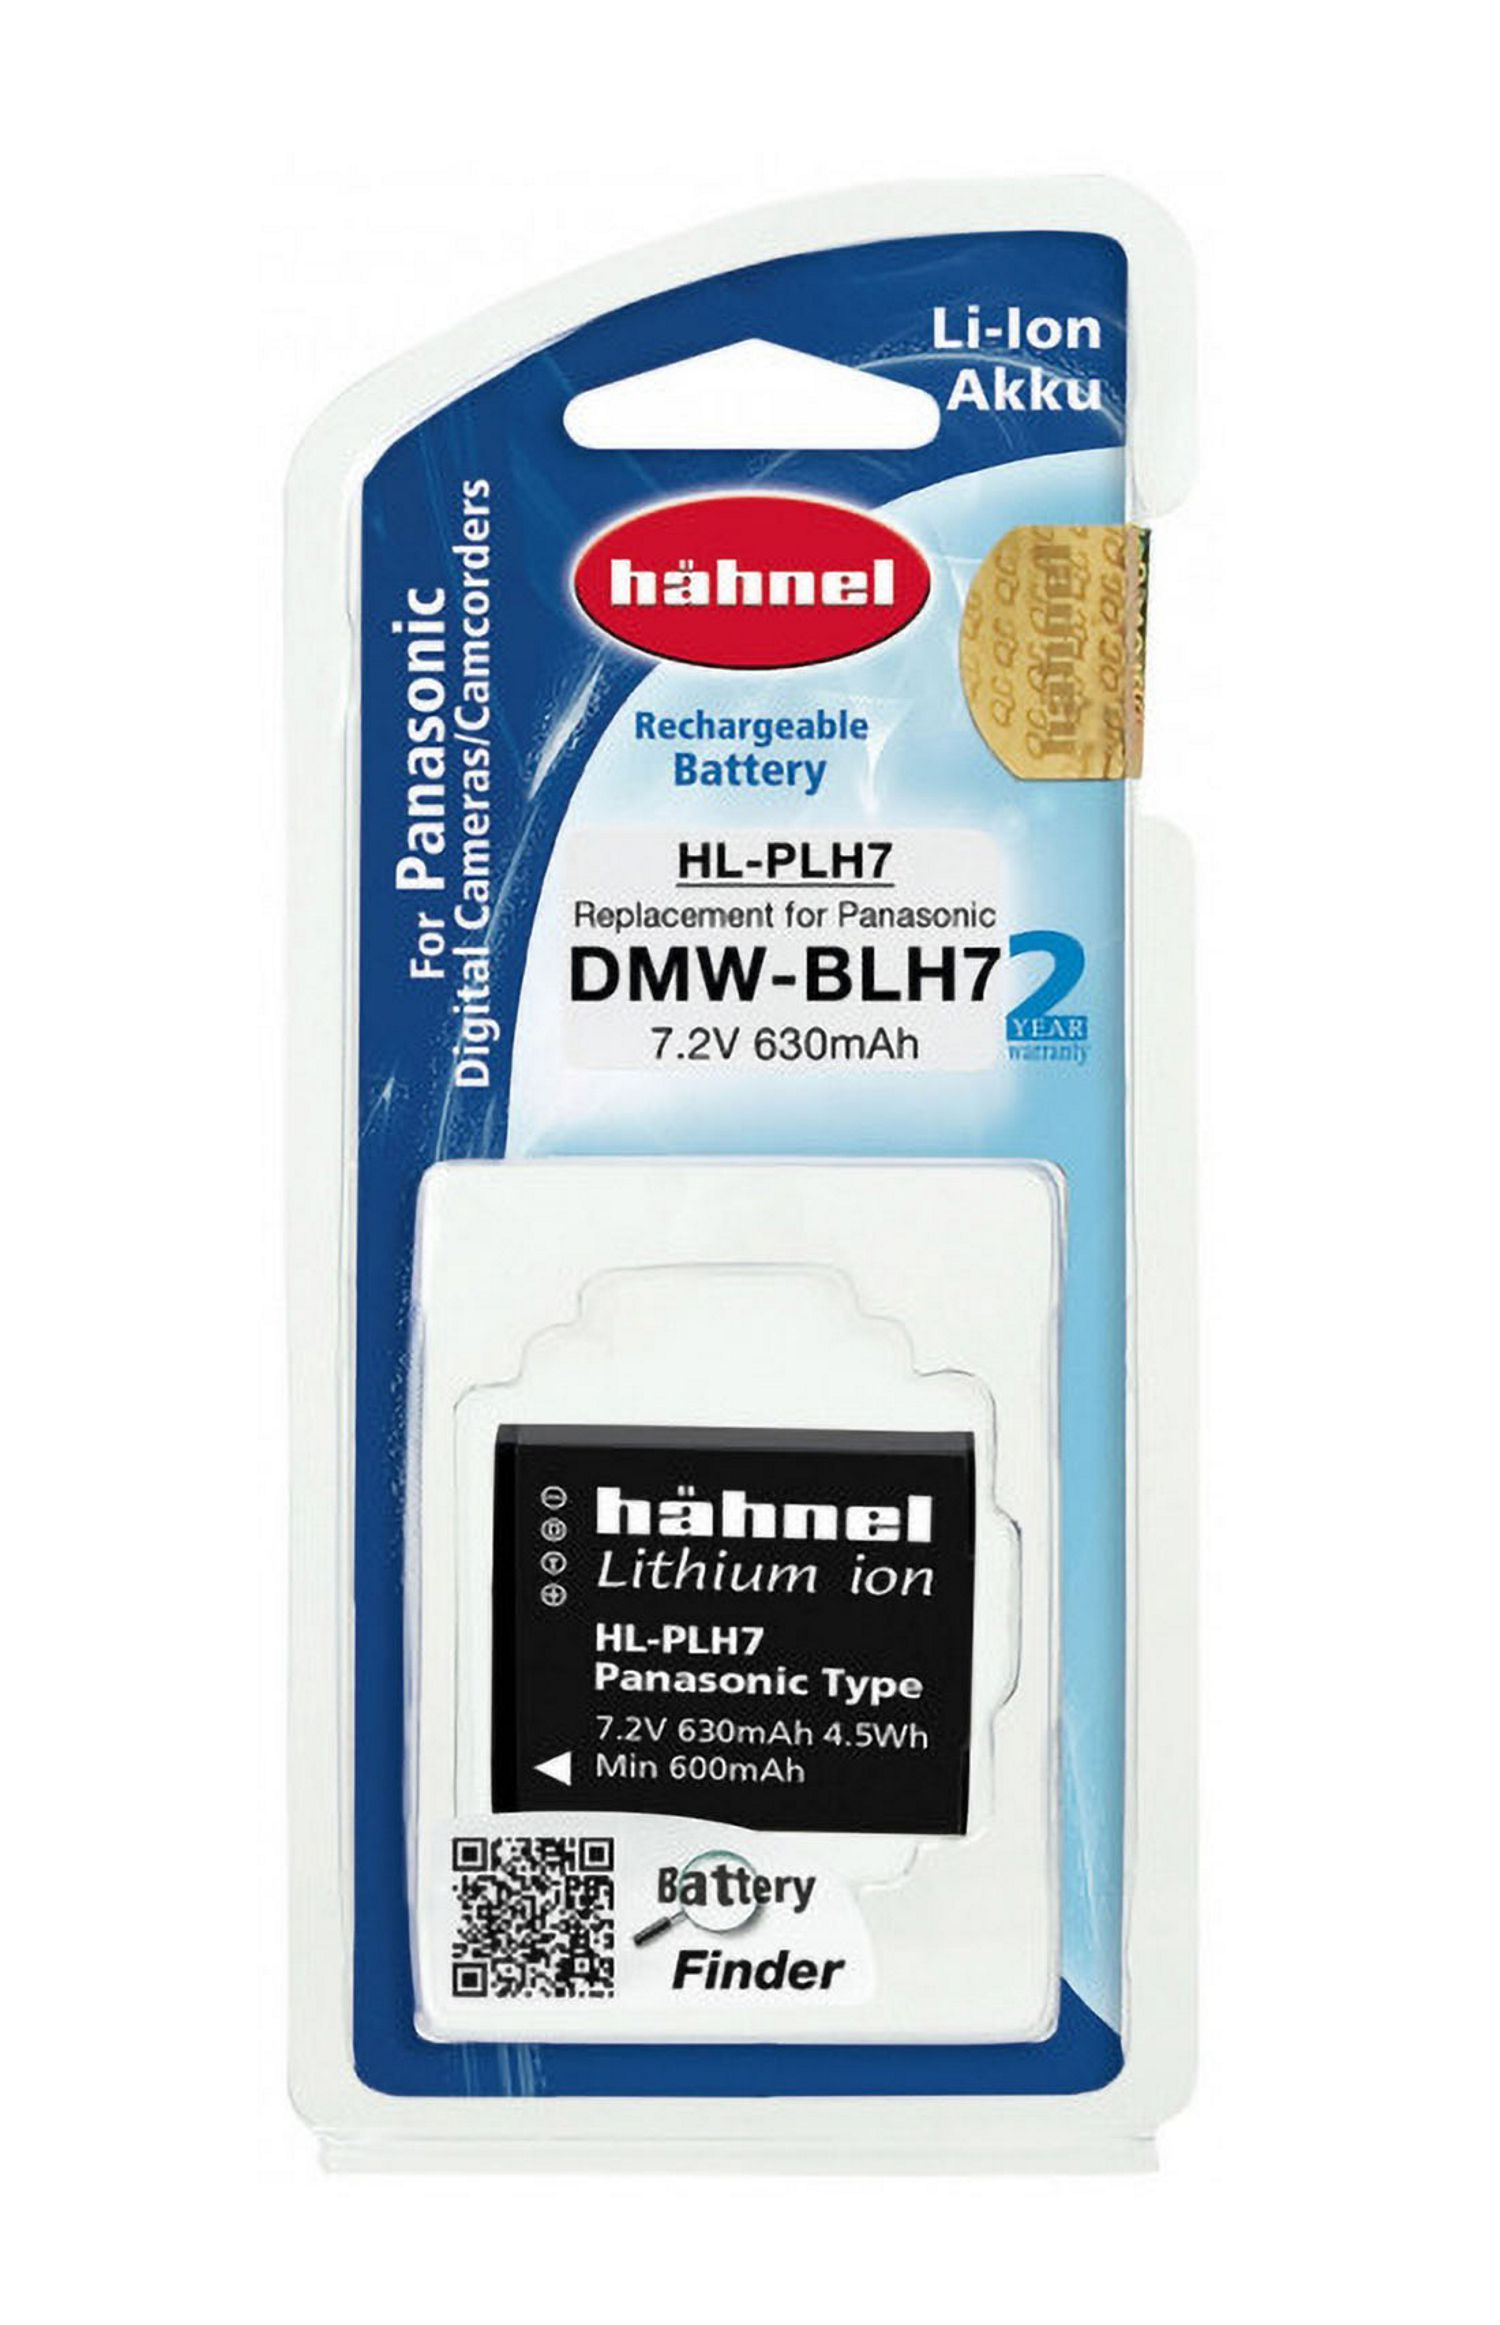 MOBILOTEC Hähnel mAh kompatibel DMW-BLH7 7.2 Volt, Akku Li-Ion, Panasonic Li-Ion 630 mit Akku